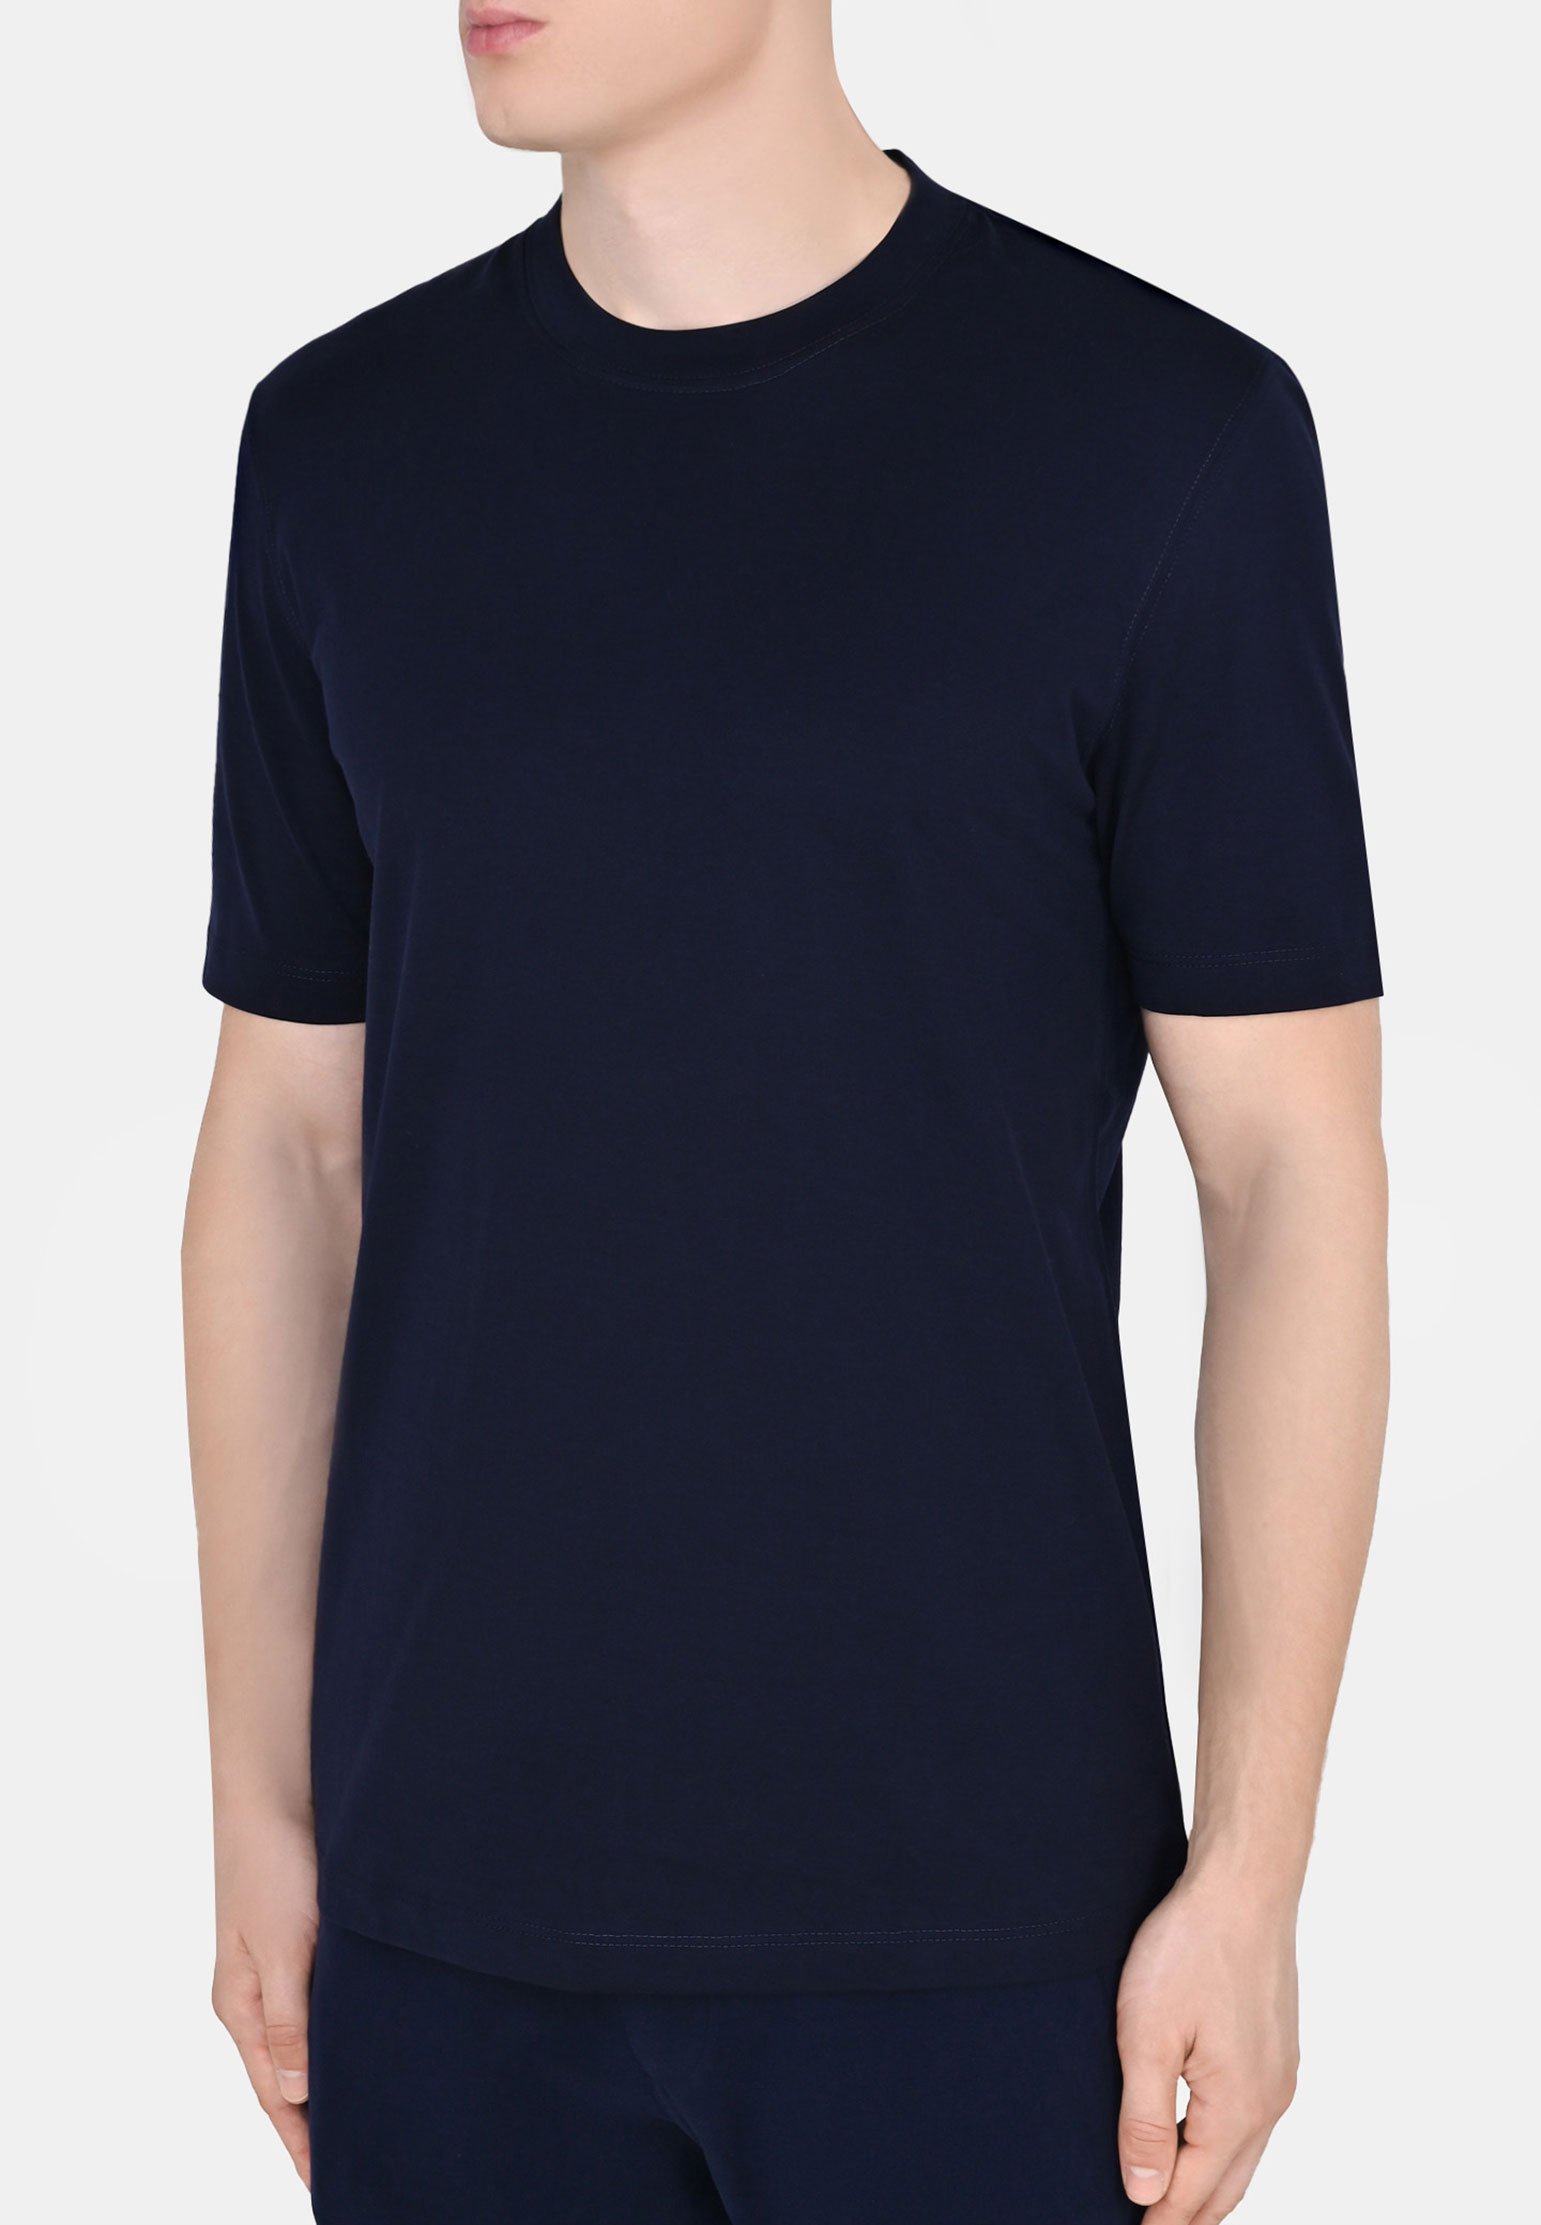 T-Shirt BRUNELLO CUCINELLI Color: blue (Code: 766) in online store Allure